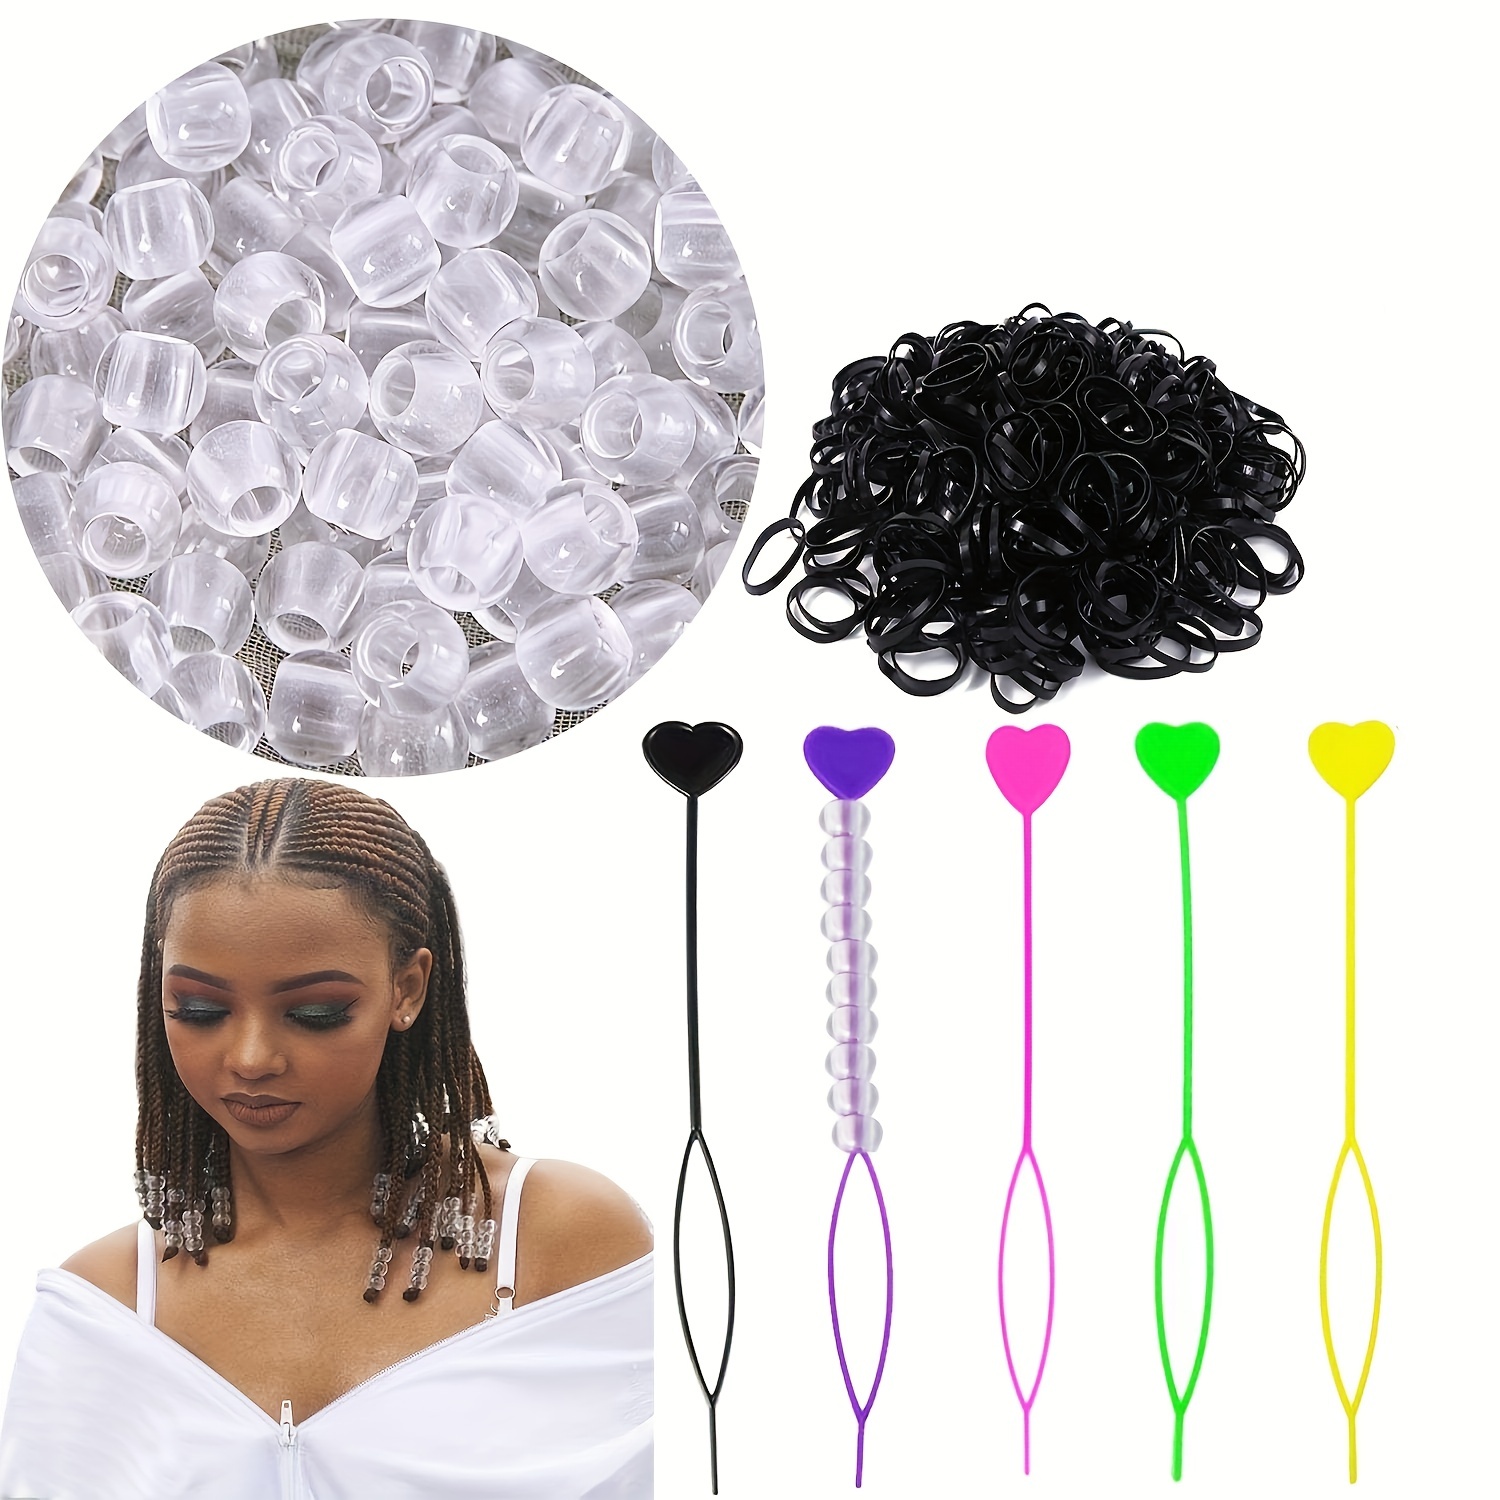 32Pieces Hair Accessory Includes 20 Pcs Hair Accessory Colorful Hair String Hair Thread Yarn and 12pcs Acrylic Dreadlock Beads Hair Jewelry